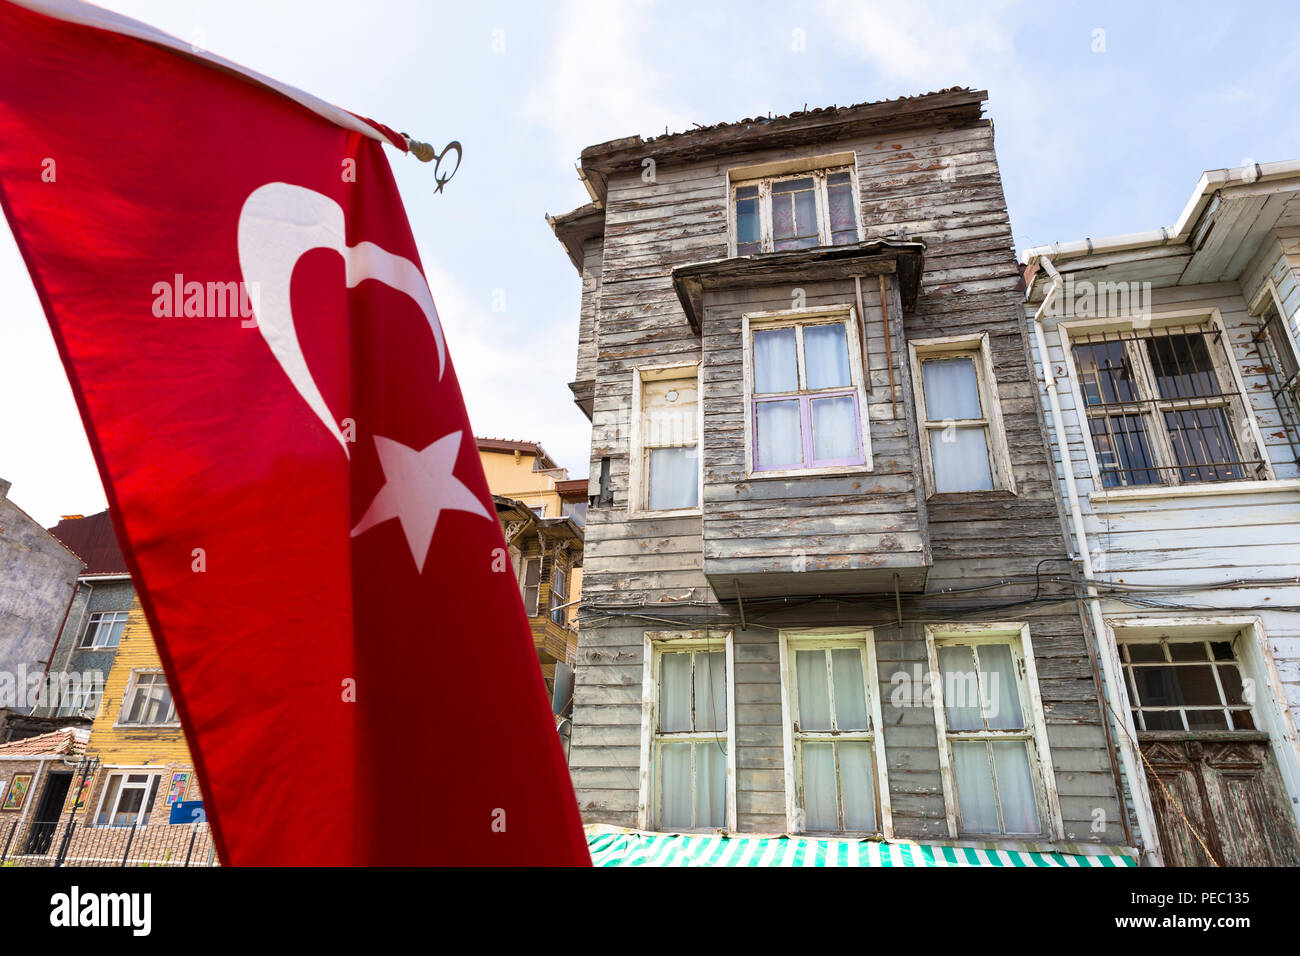 Turkish flag and traditional architecture of homes in the area of Kariye Muzesi, Edirnekapi in Istanbul, Republic of Turkey Stock Photo